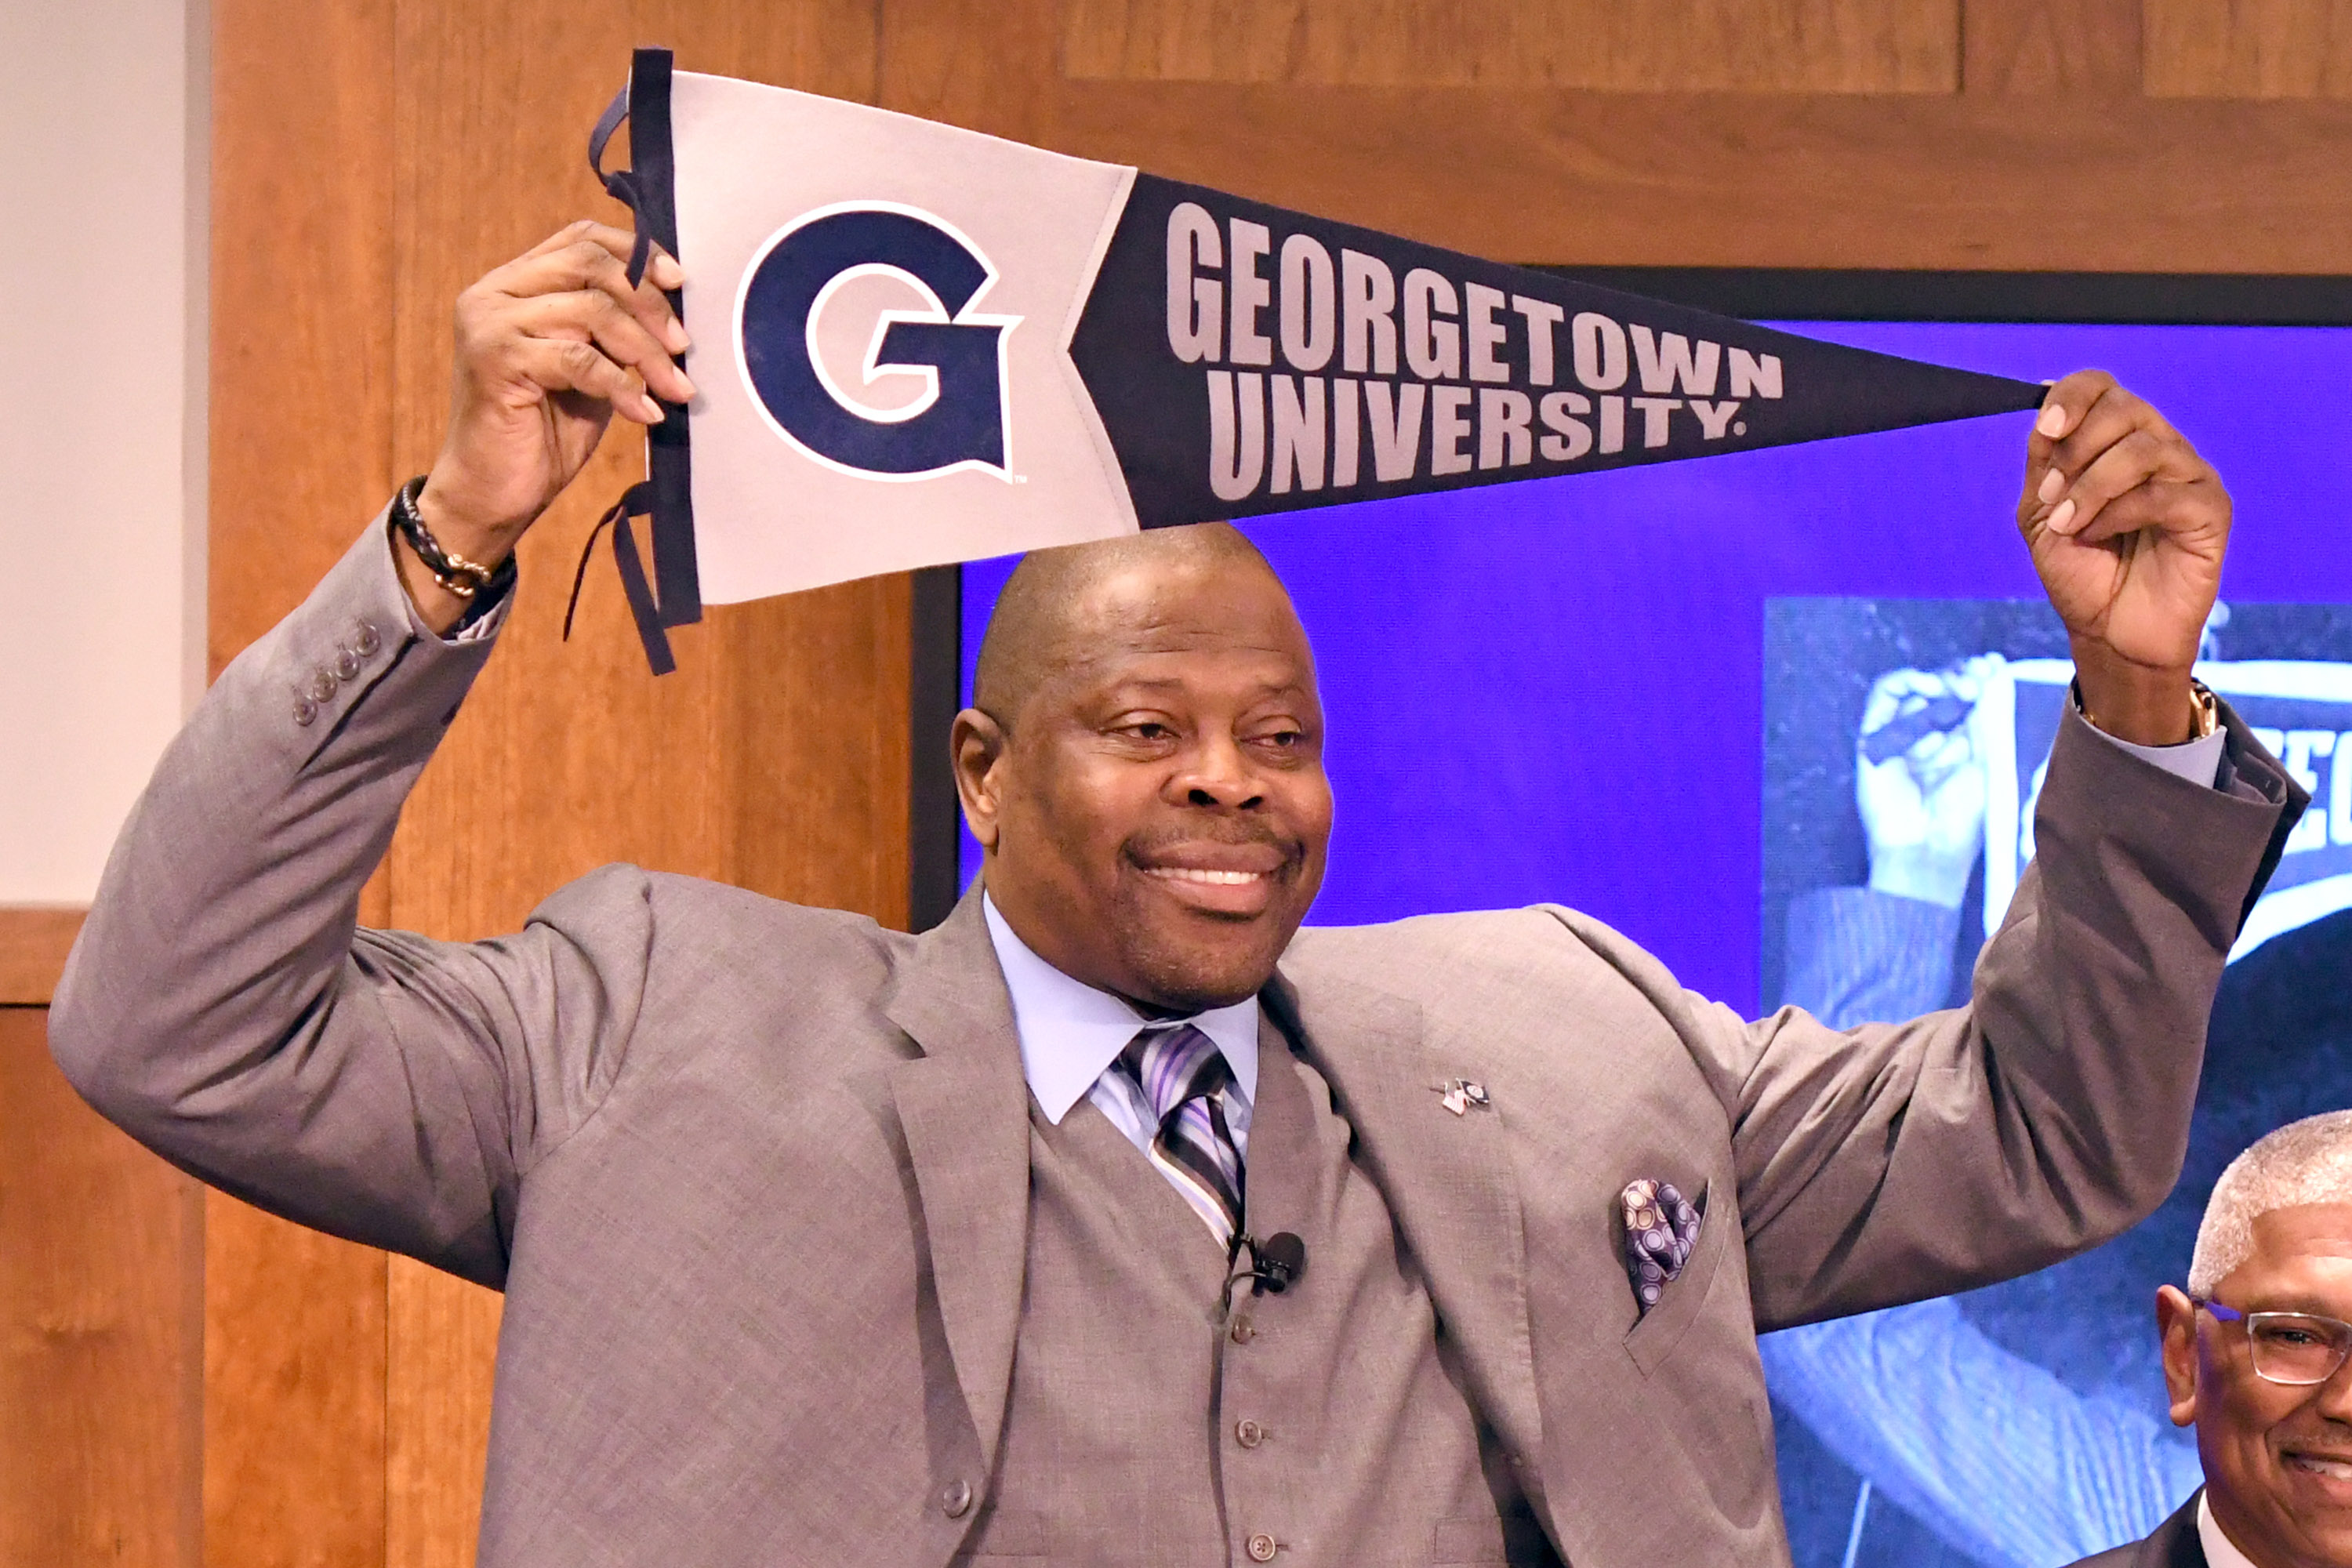 Chris Mullin, Patrick Ewing Jr. brought the St. John's-Georgetown